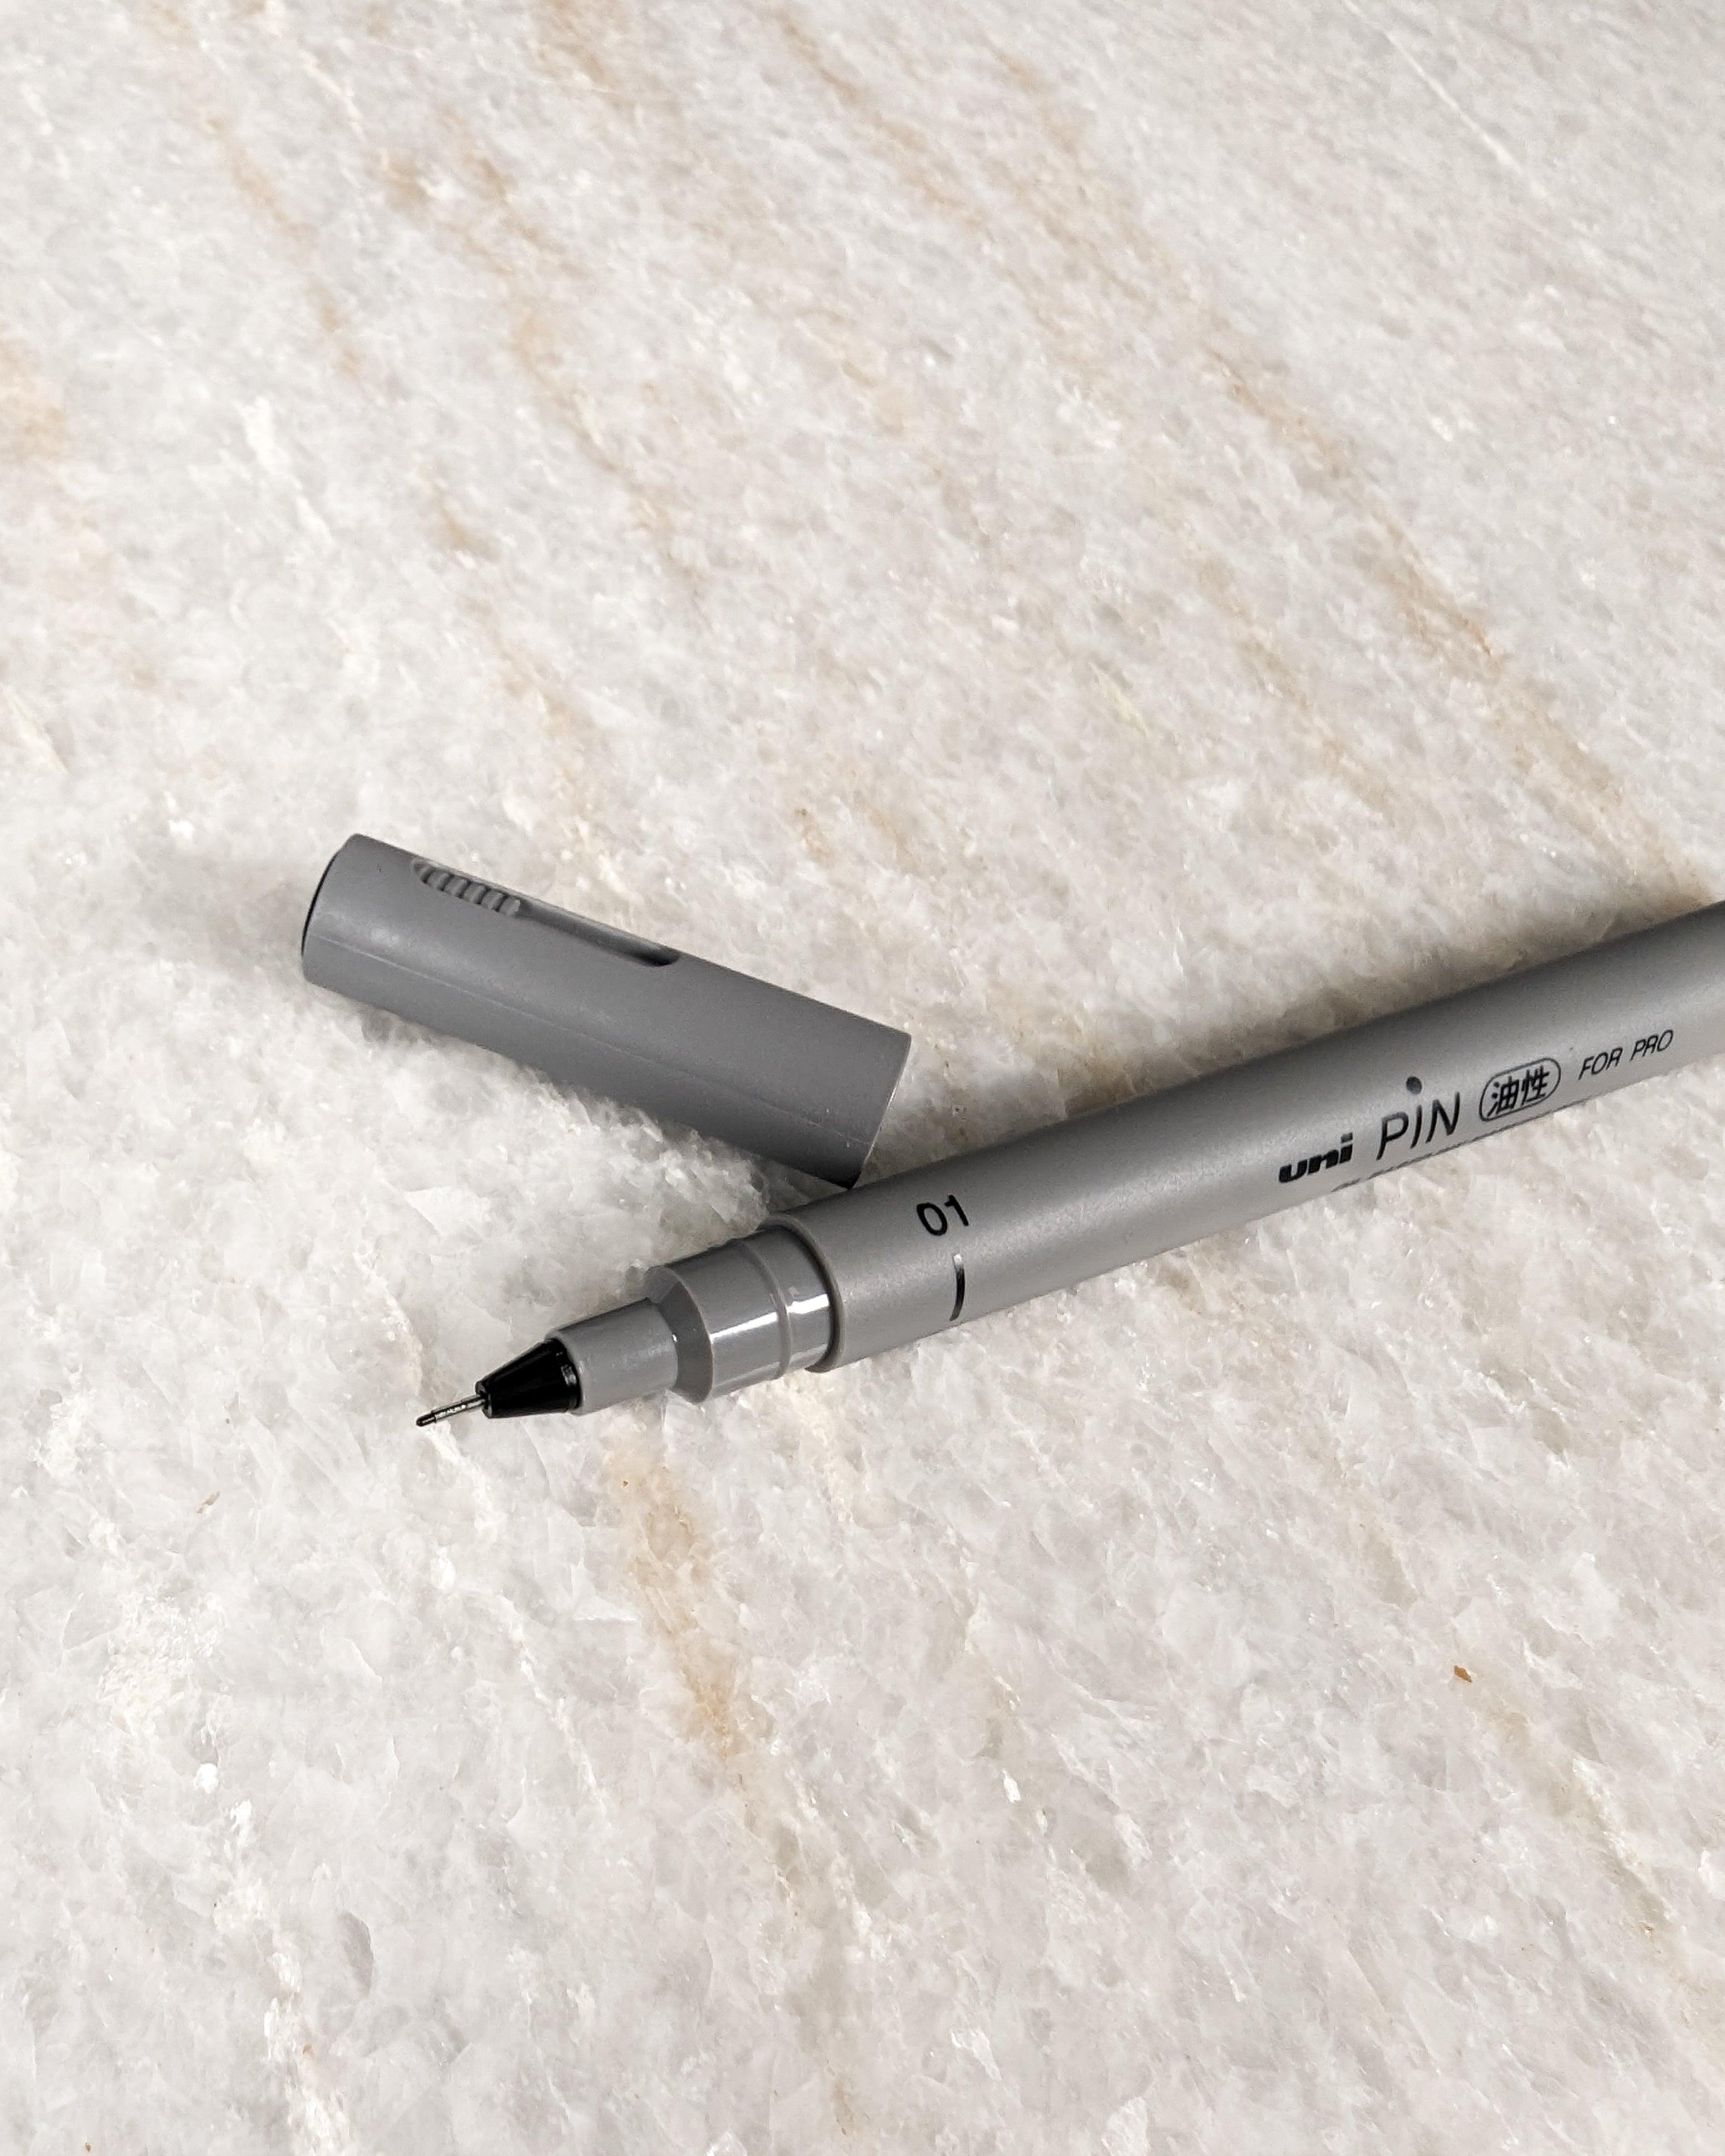 Uni Pin Oil Based Marking Pen.